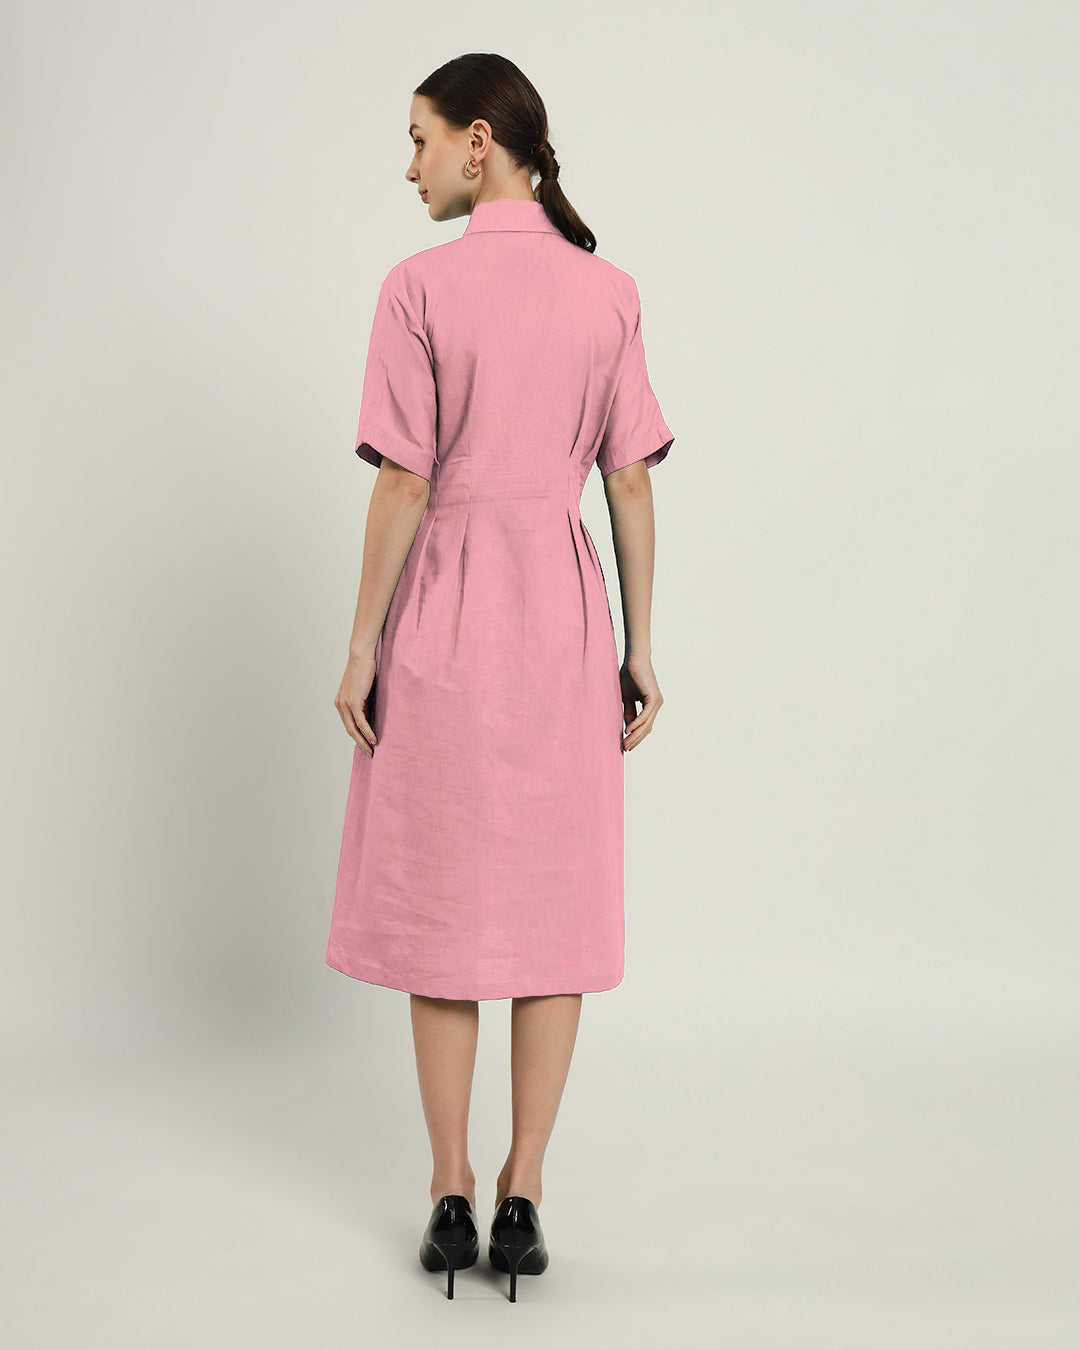 The Salford Fondant Pink Cotton Dress